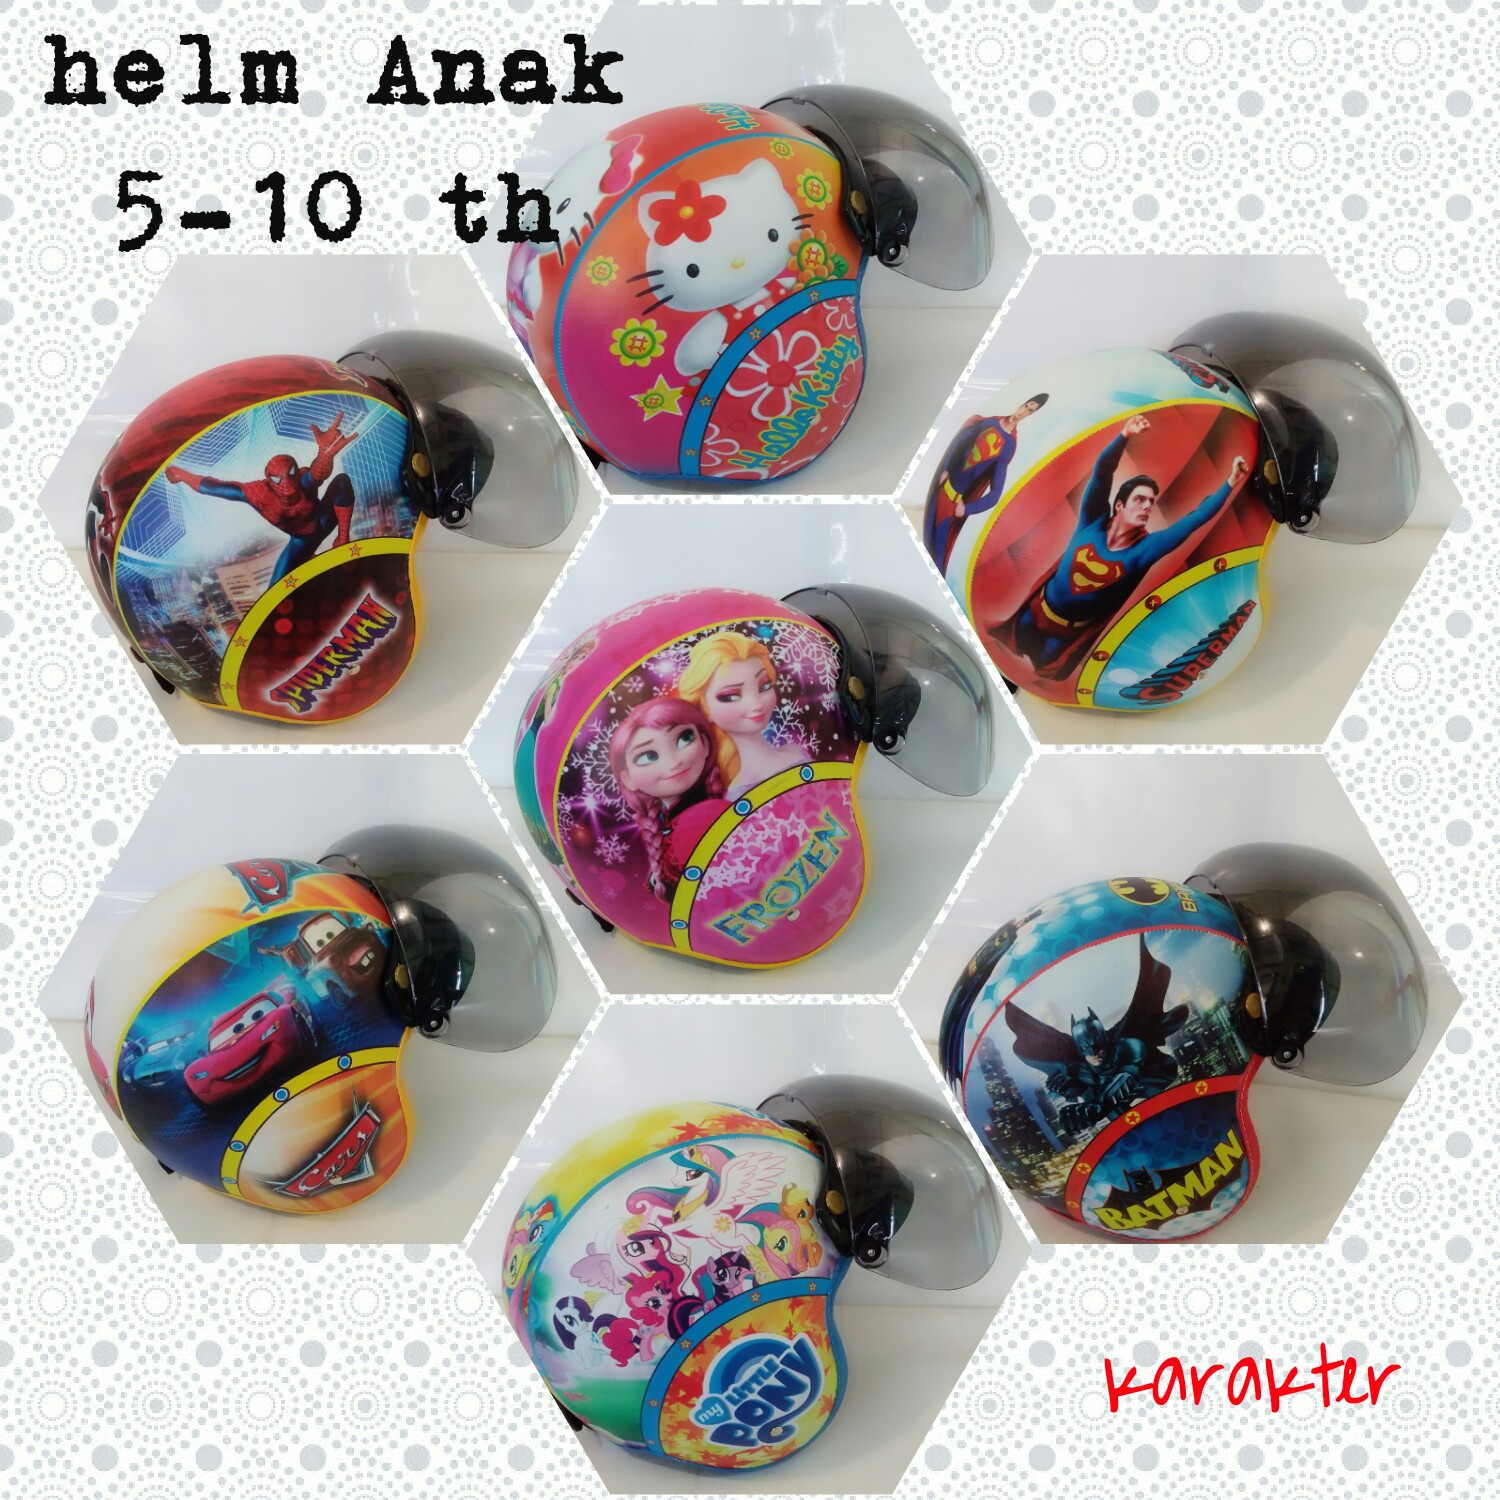 Helm Anak 5-10 th